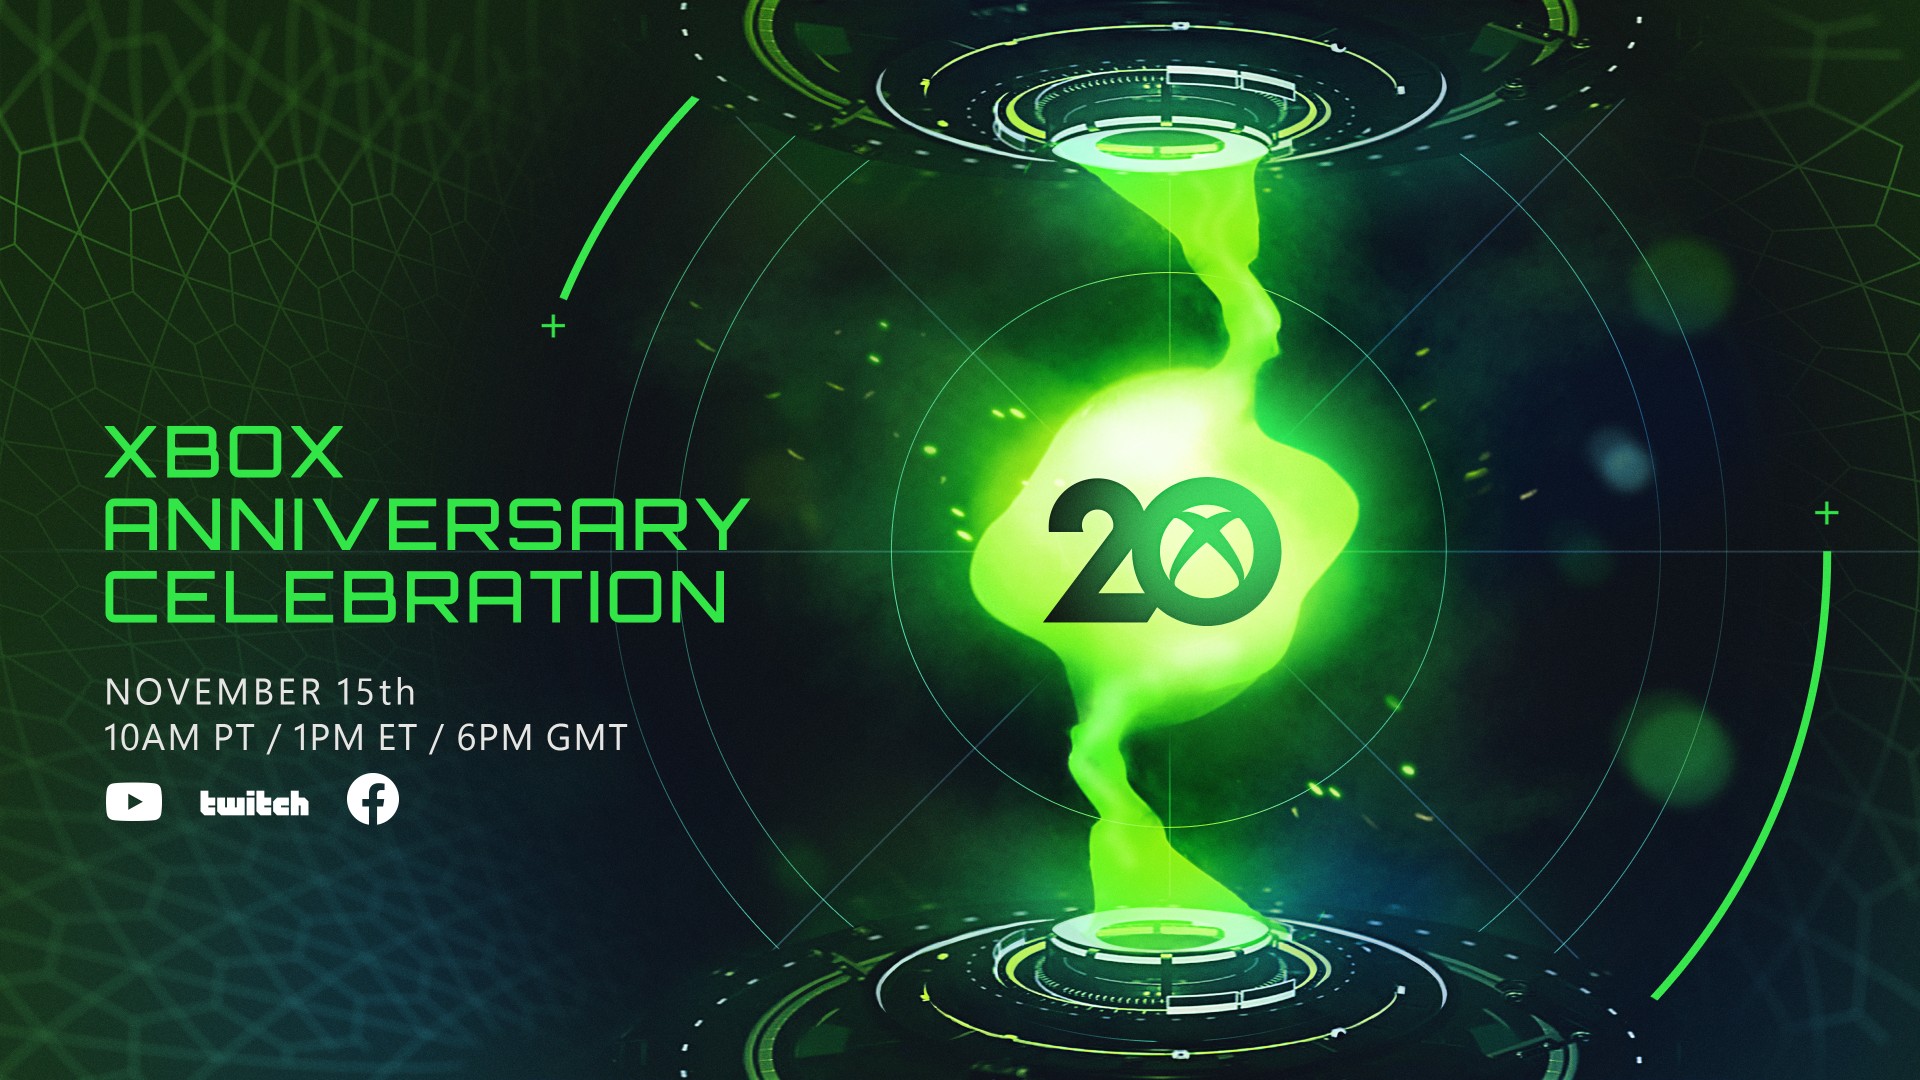 Xbox Anniversary Save the Date Image